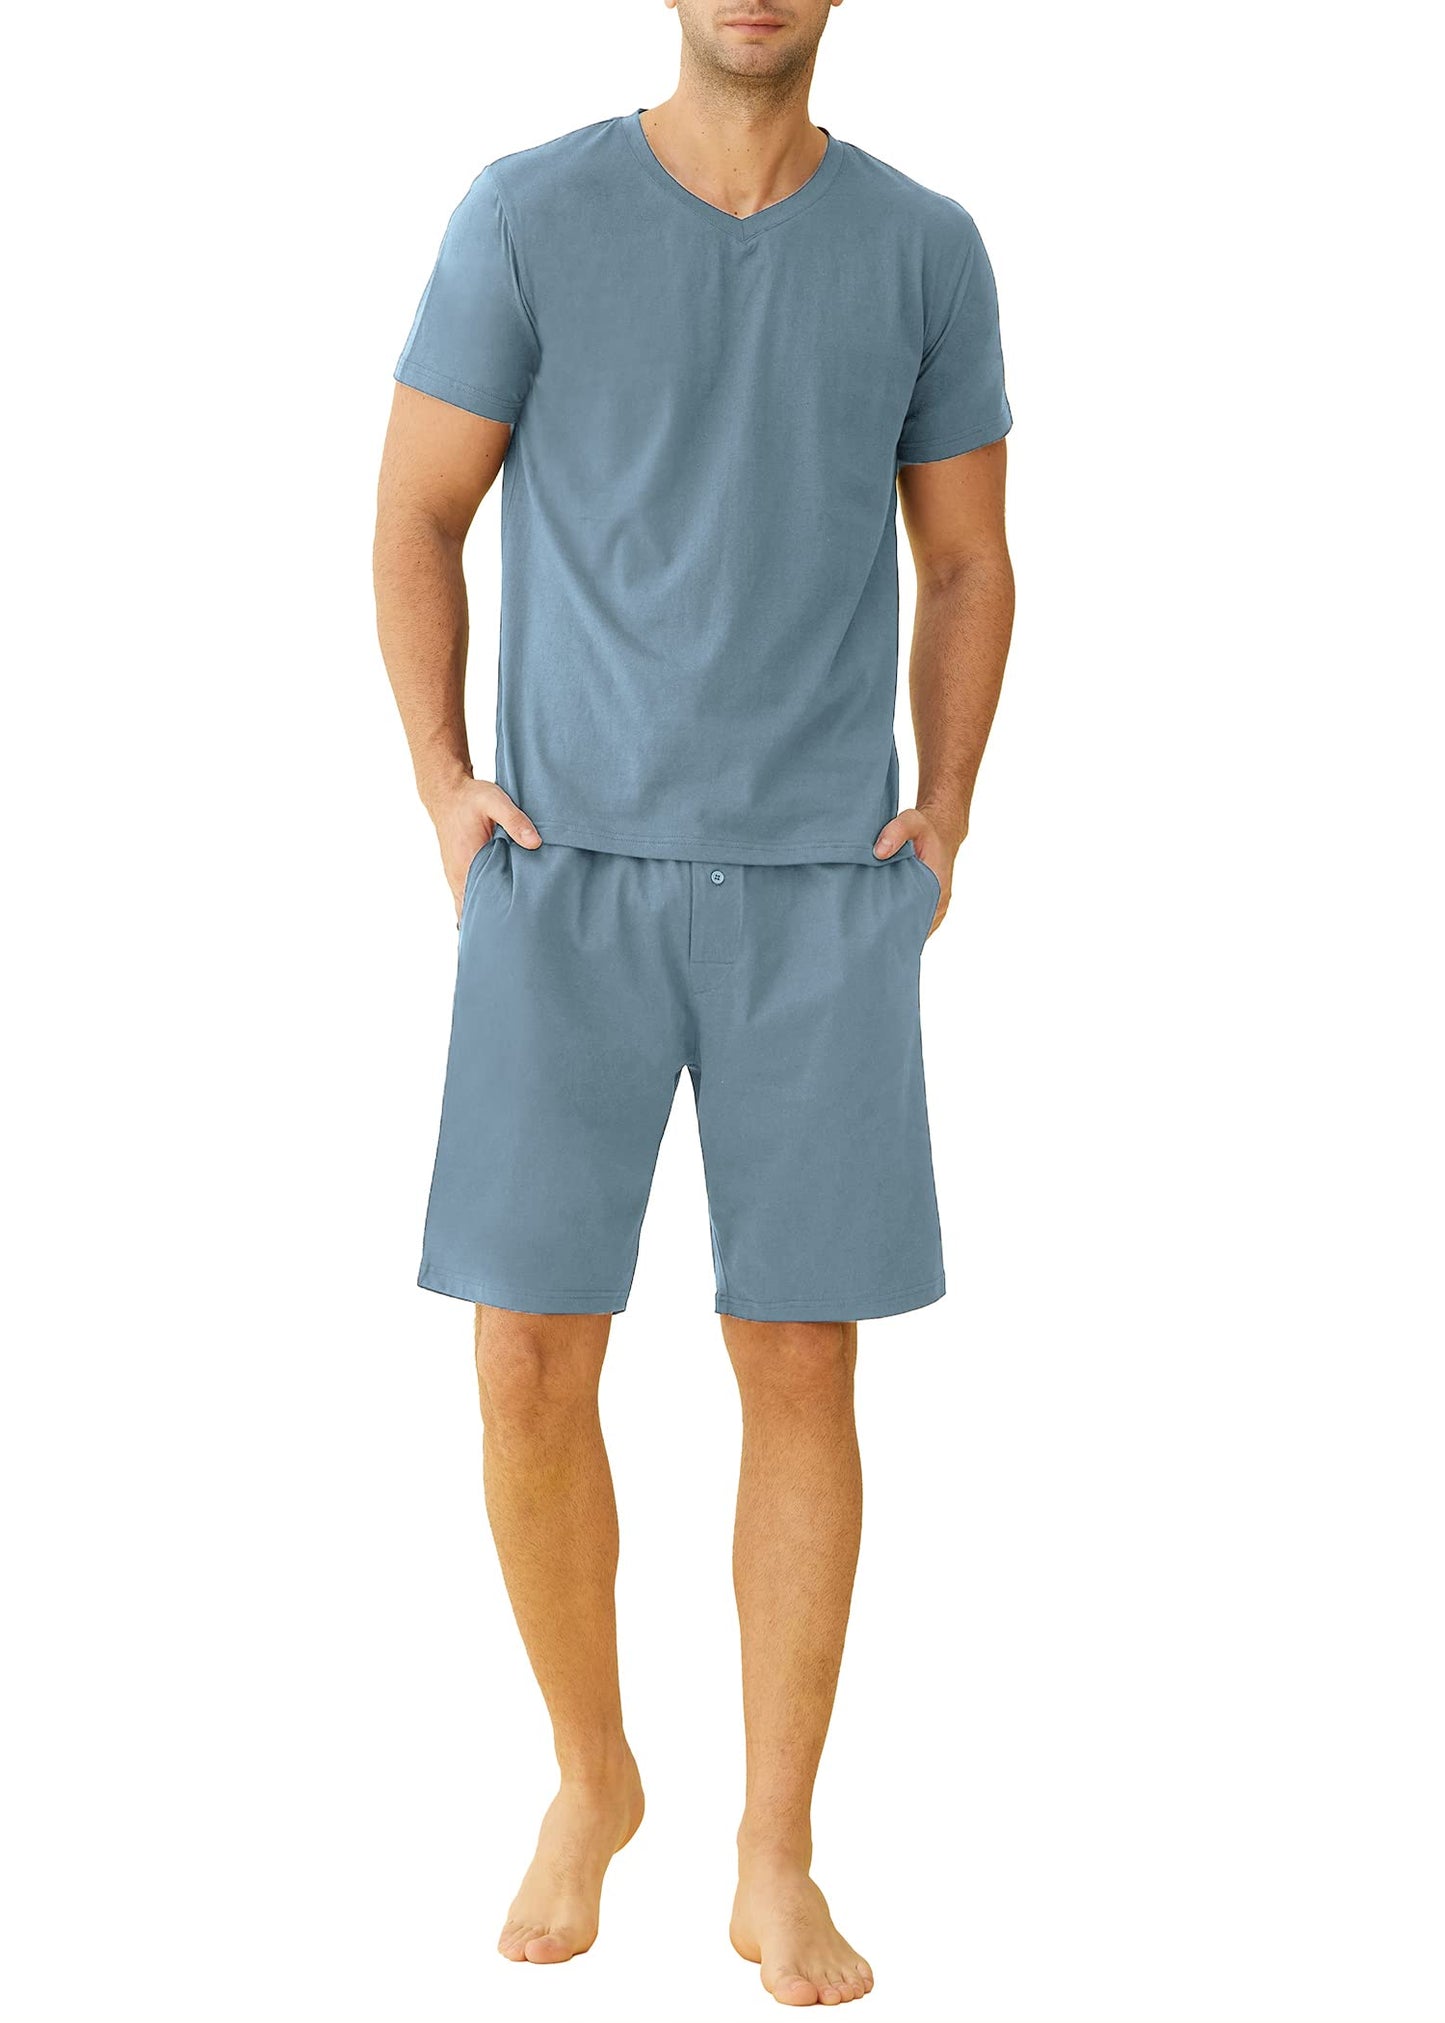 Men's Cotton Shirt with Shorts Pajama Set Knit Lounge Set - Latuza